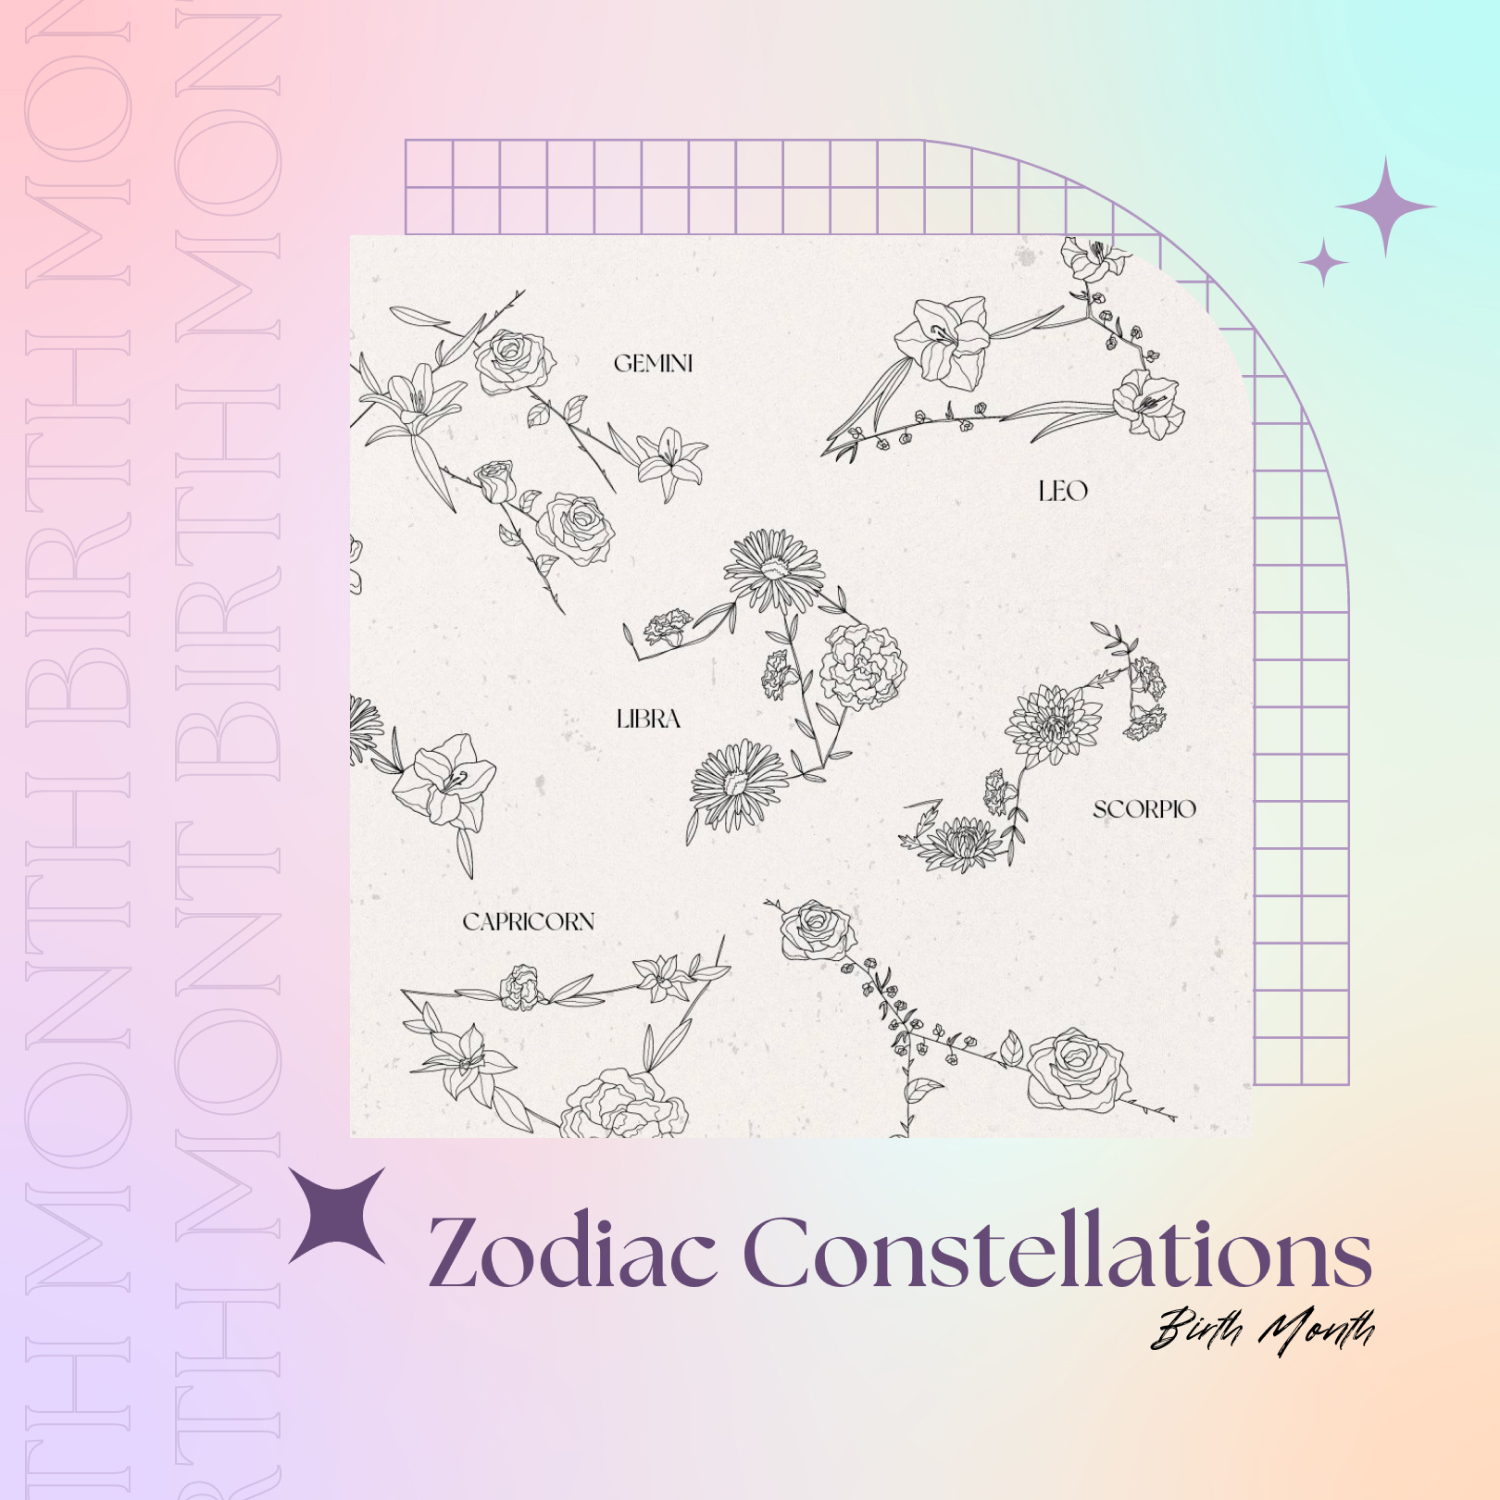 Birth Month Zodiac Constellations.